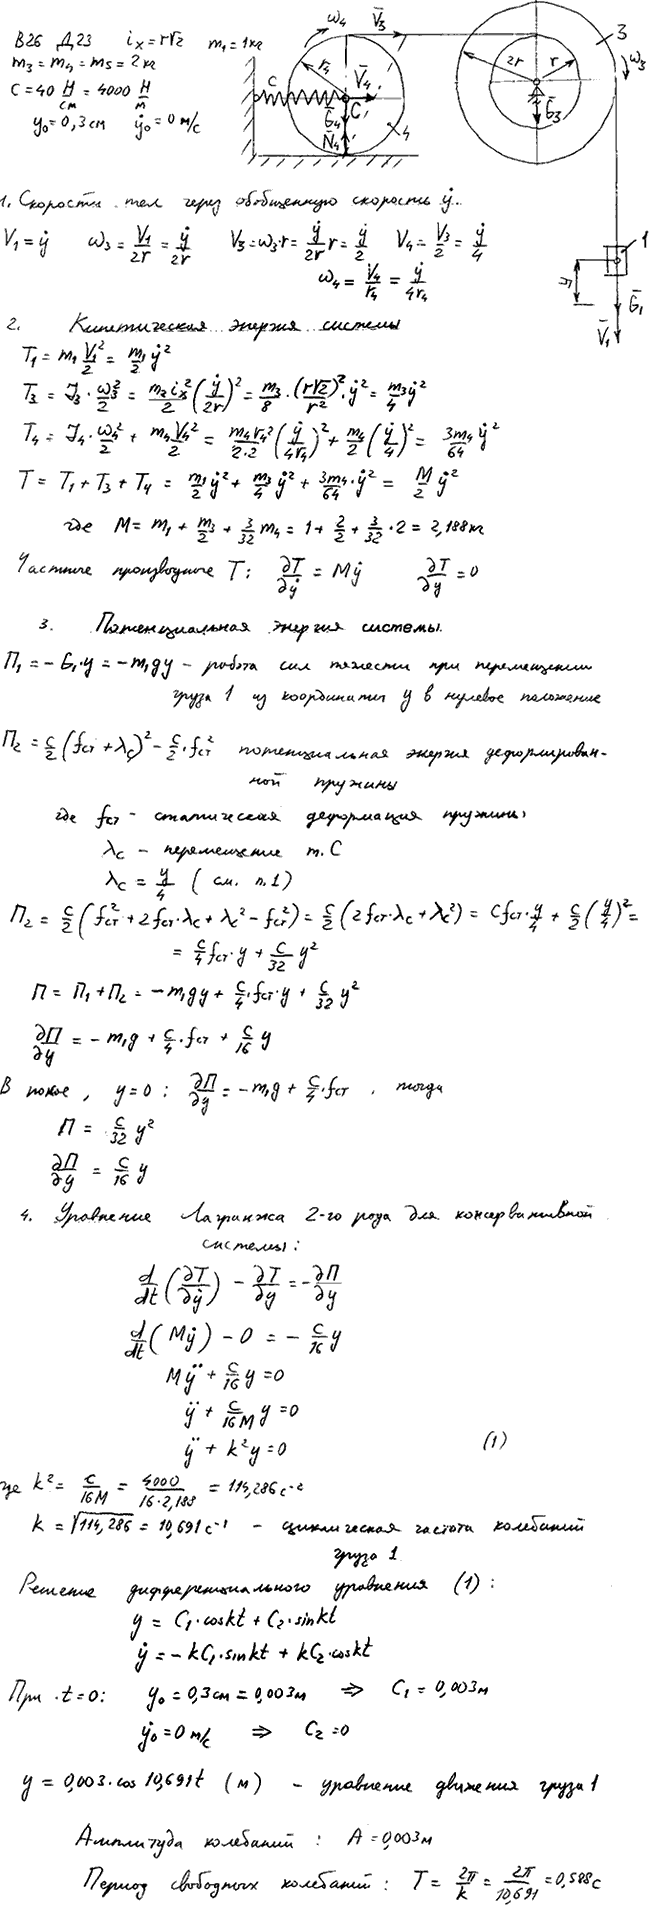 Задание Д.23 вариант 26. ix=r√2 м; m1=1 кг; m3, m4, m5=2 кг; c=40 Н/см; y0=0,3 см; y^\'0=0